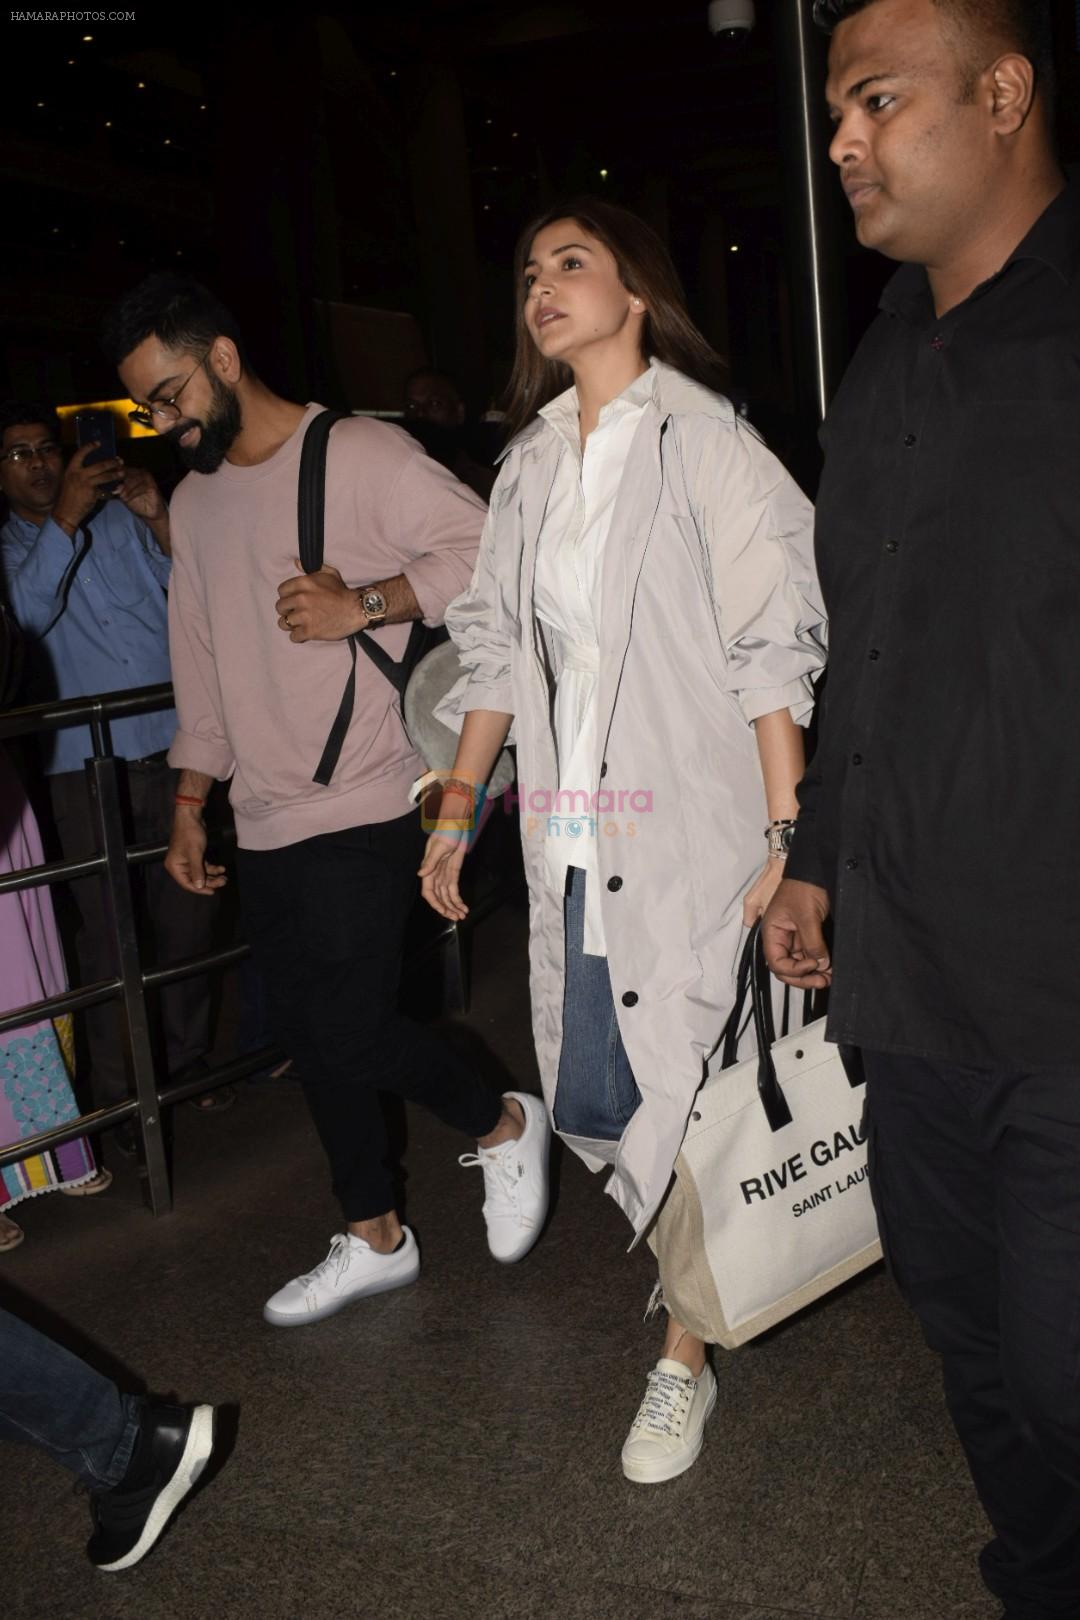 Virat Kohli, Anushka Sharma spotted at airport on 11th Nov 2018